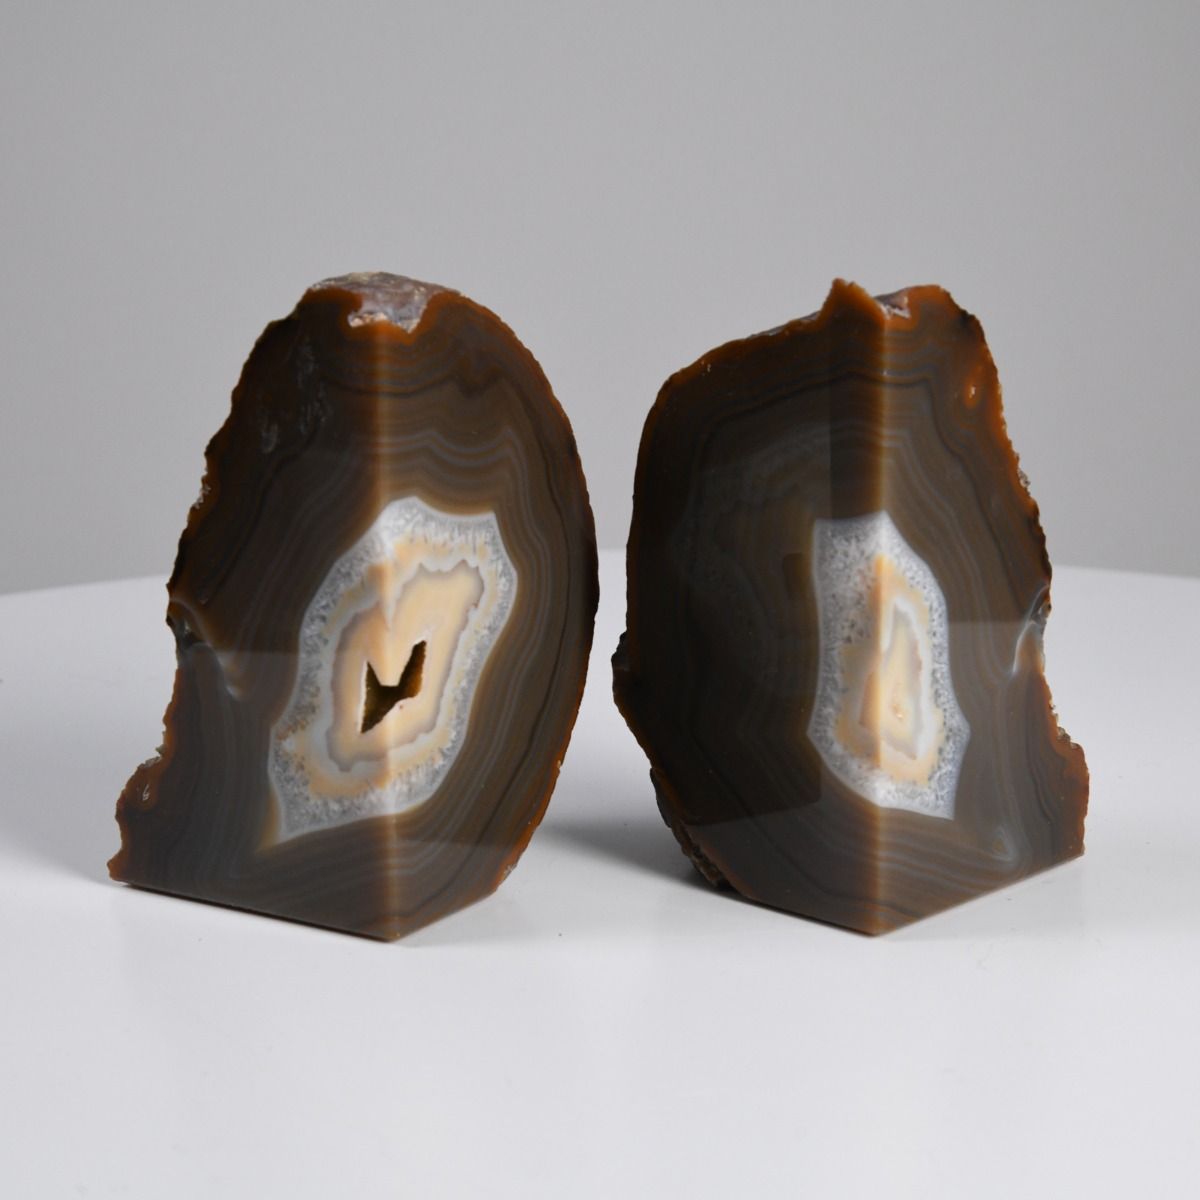 Pair of Geode Paperweights